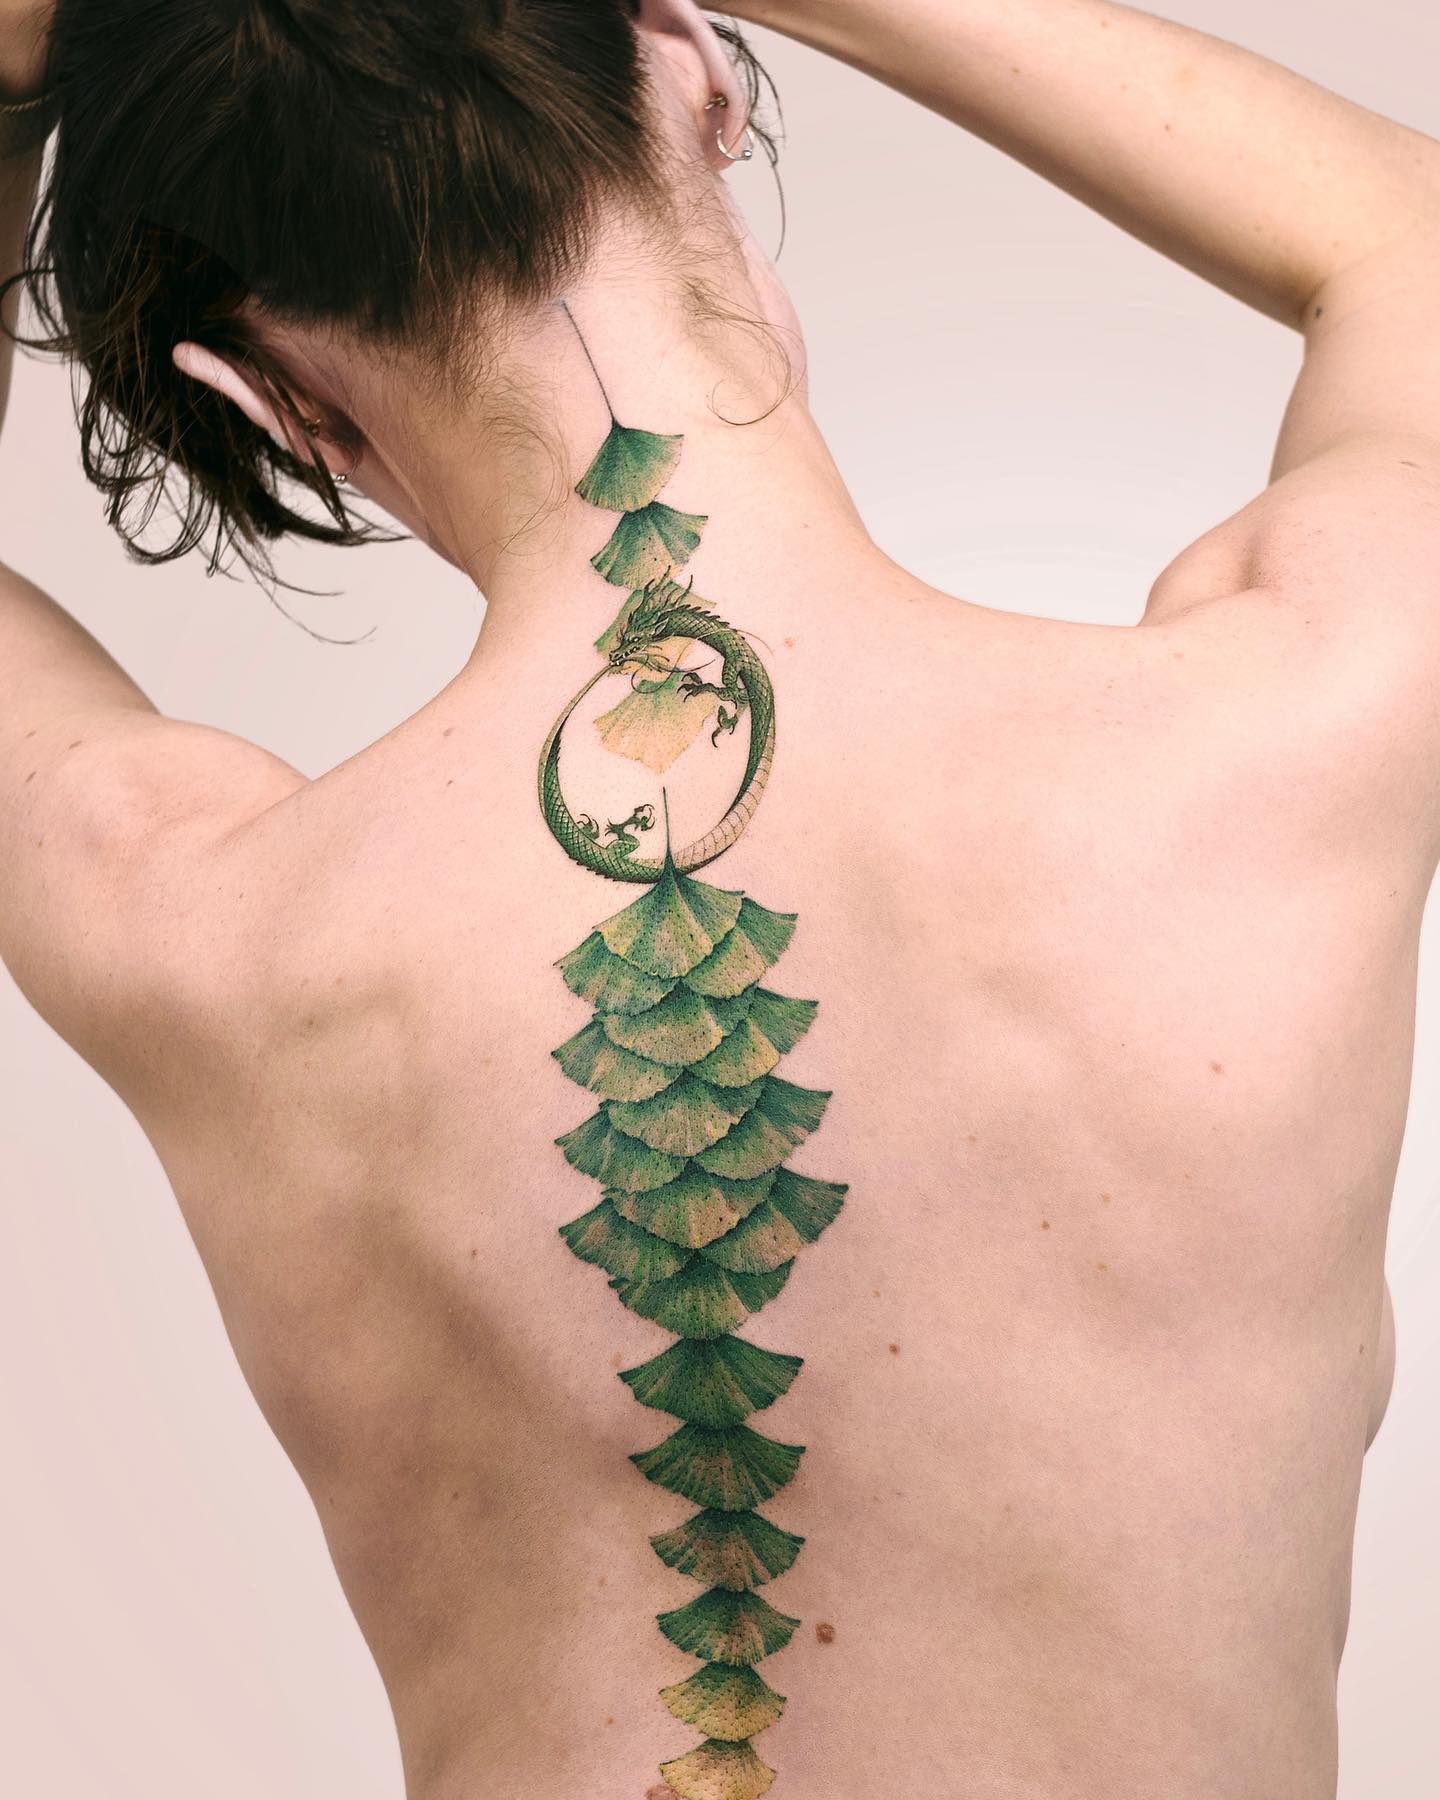 Uniqe spine tattoo by soltattoo